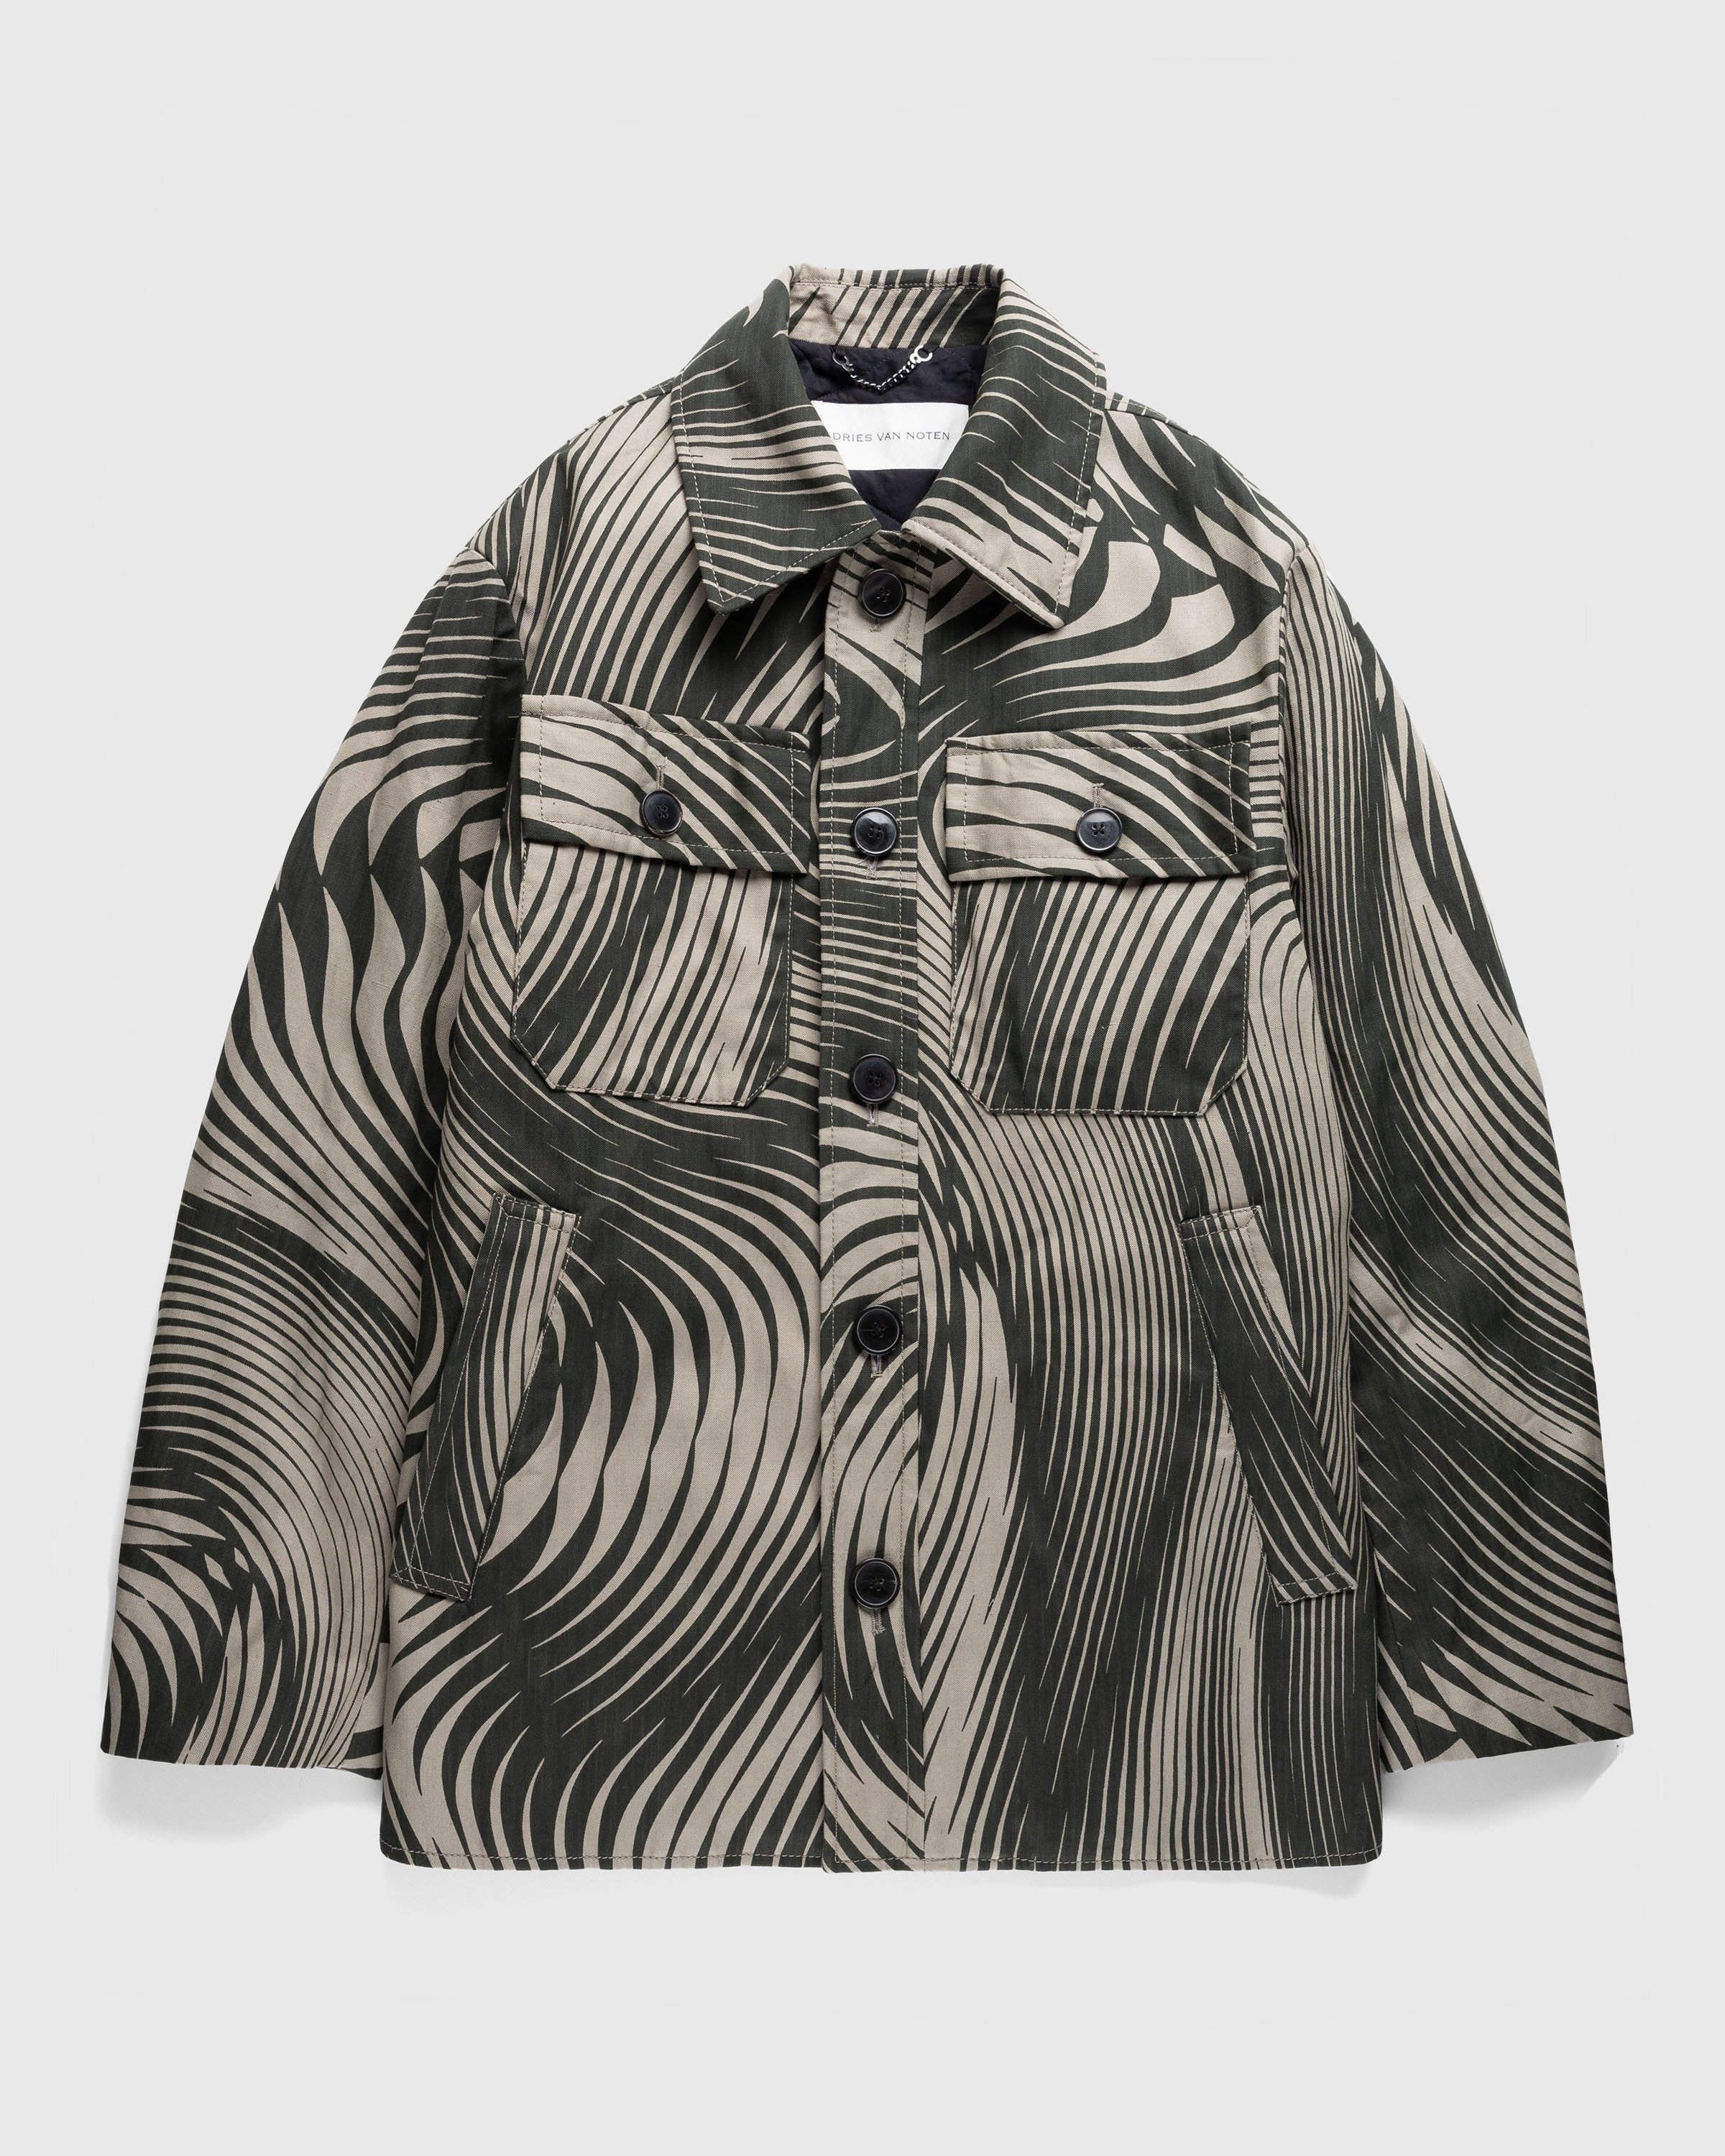 Dries van Noten - Valko Jacket Anthracite - Clothing - Grey - Image 1